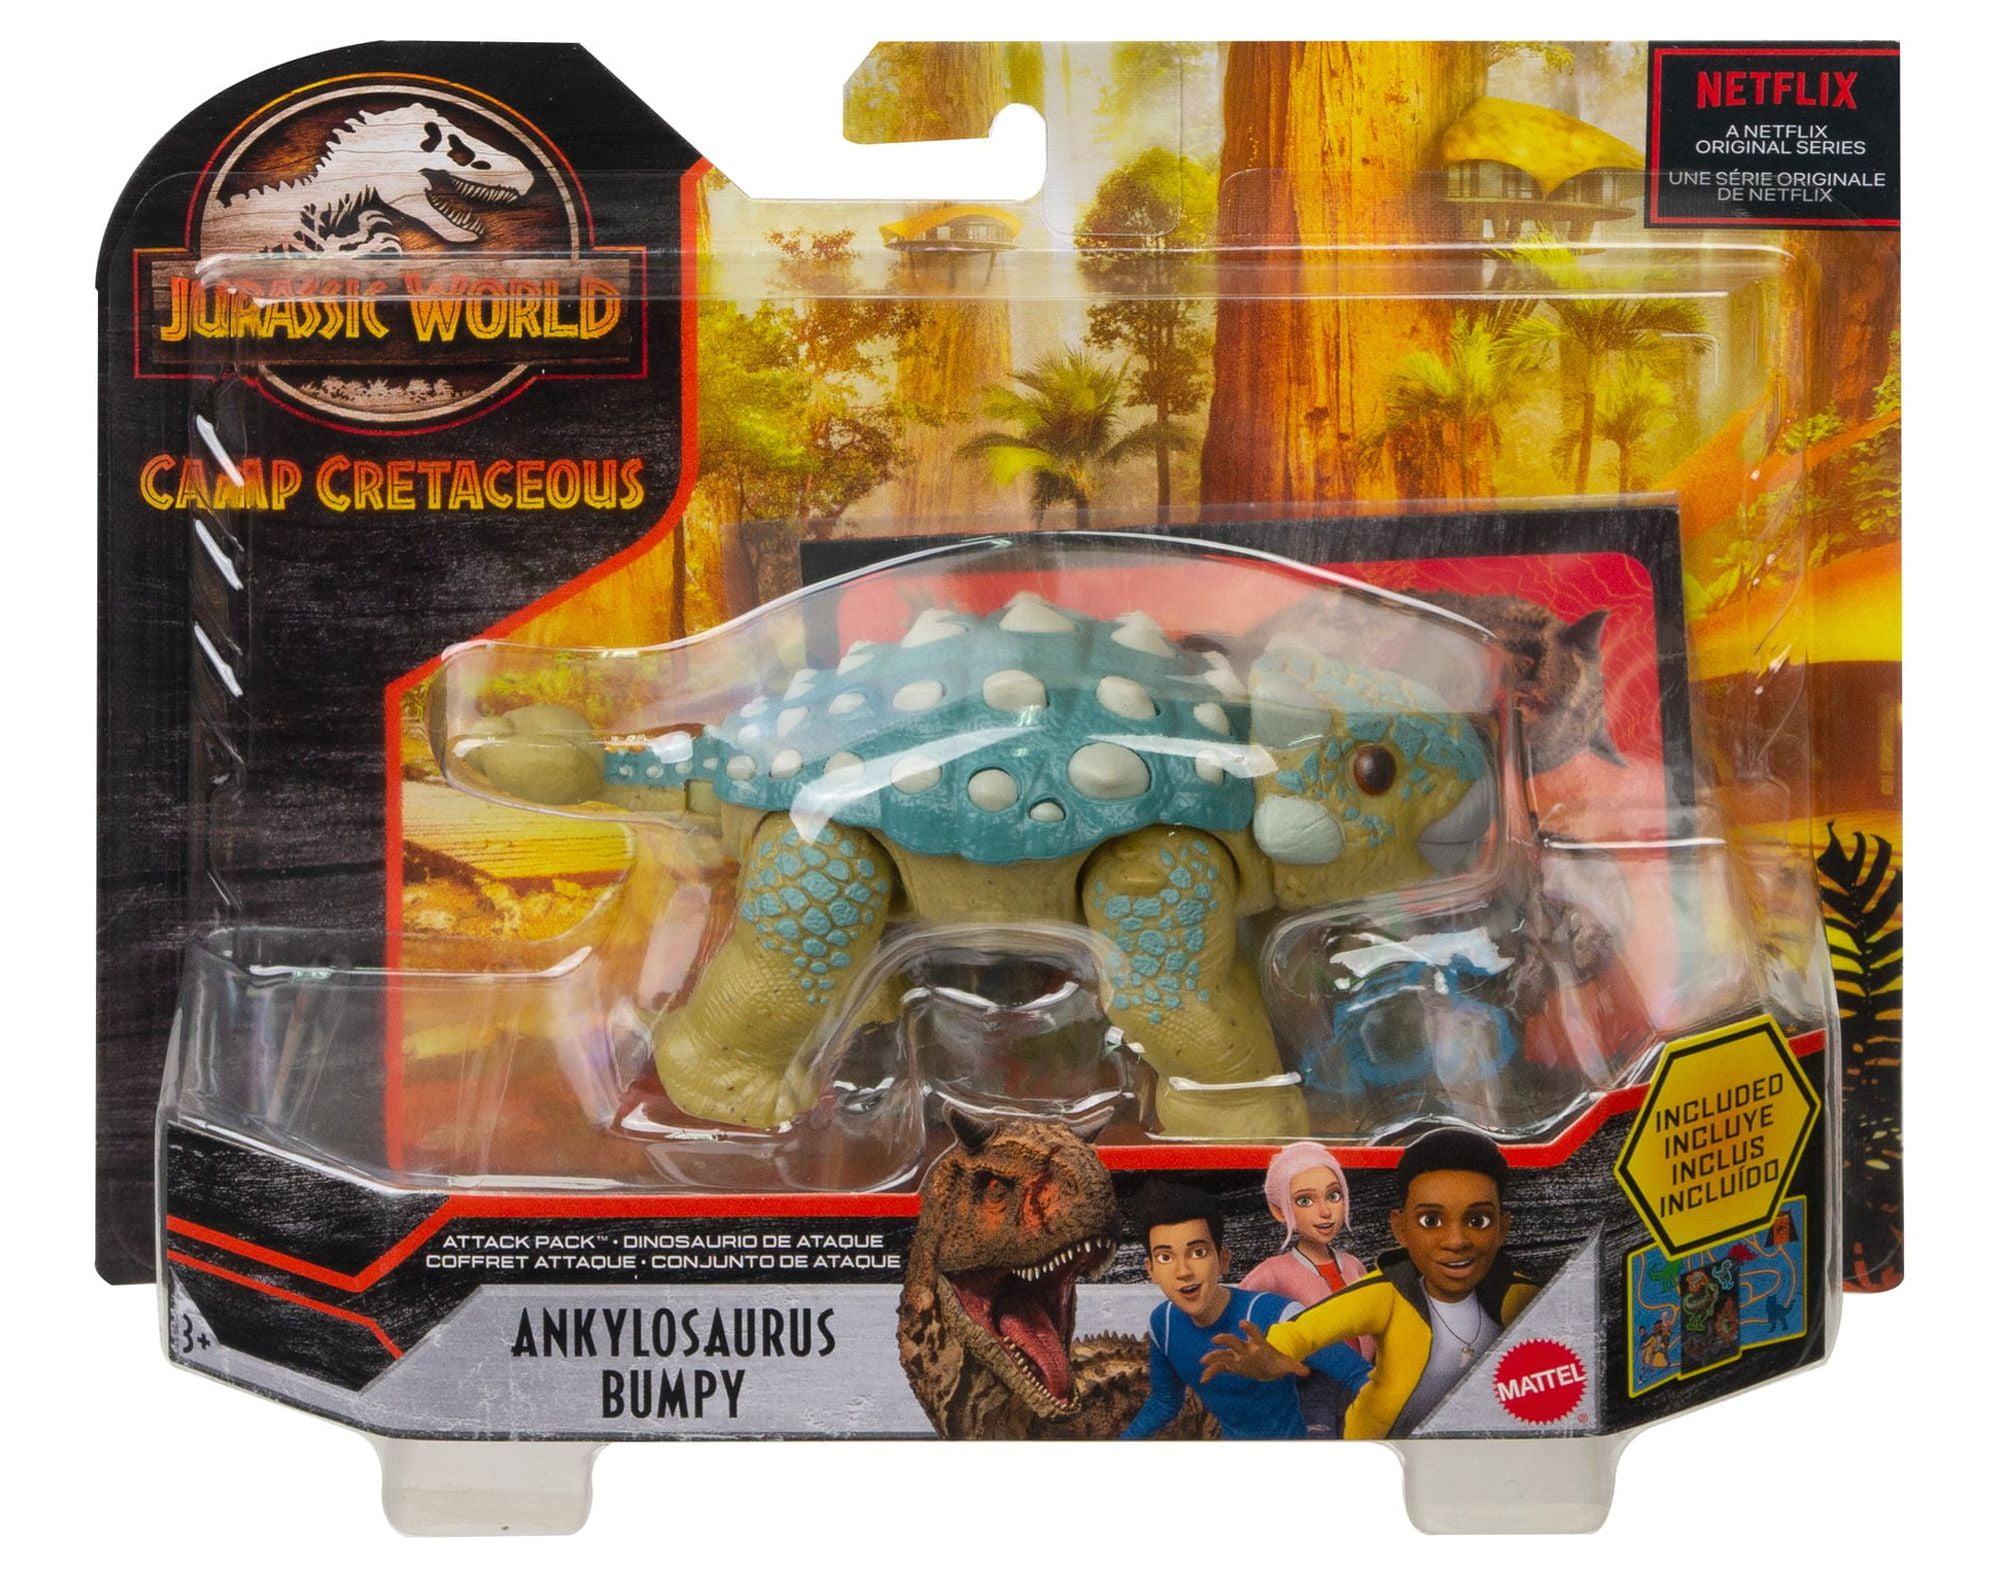 Jurassic World Ankylosaurus Bumpy